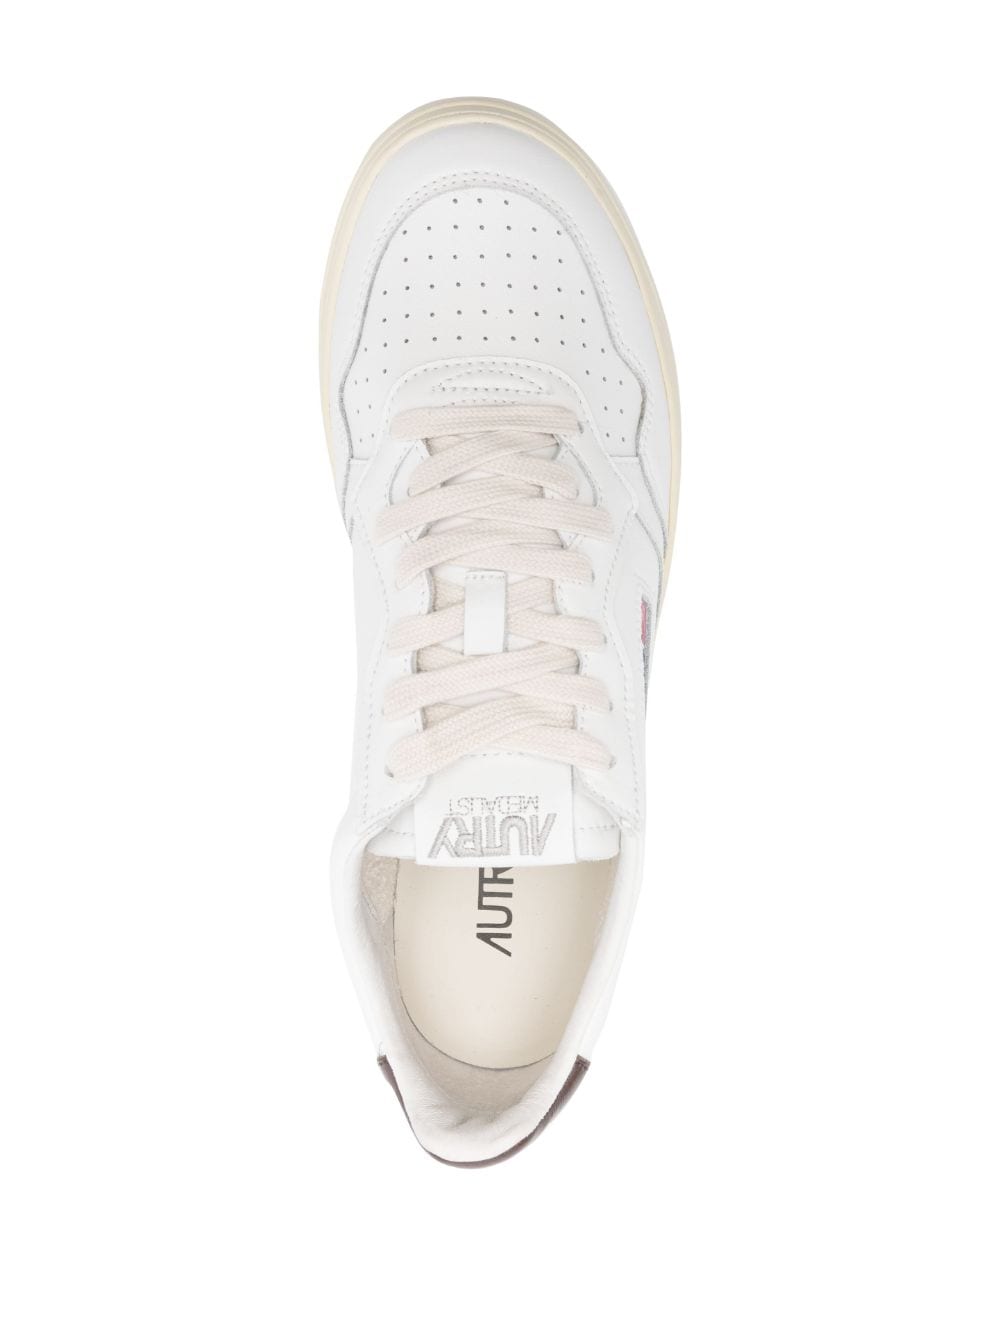 Sneaker bianca talloncino marrone